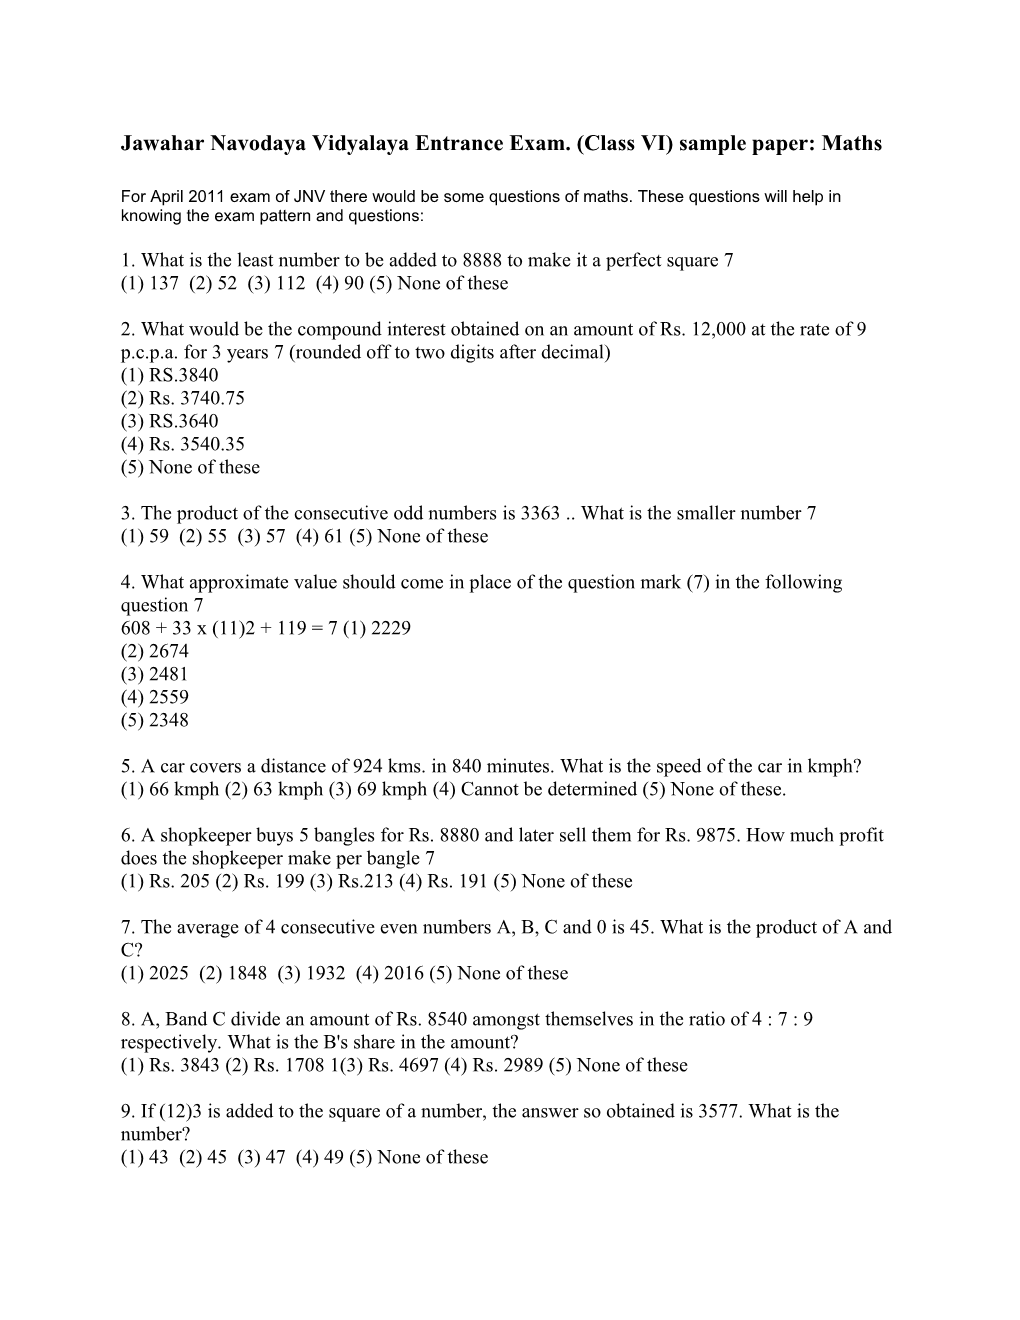 Jawaharnavodaya Vidyalaya Entrance Exam. (Class VI) Sample Paper: Maths